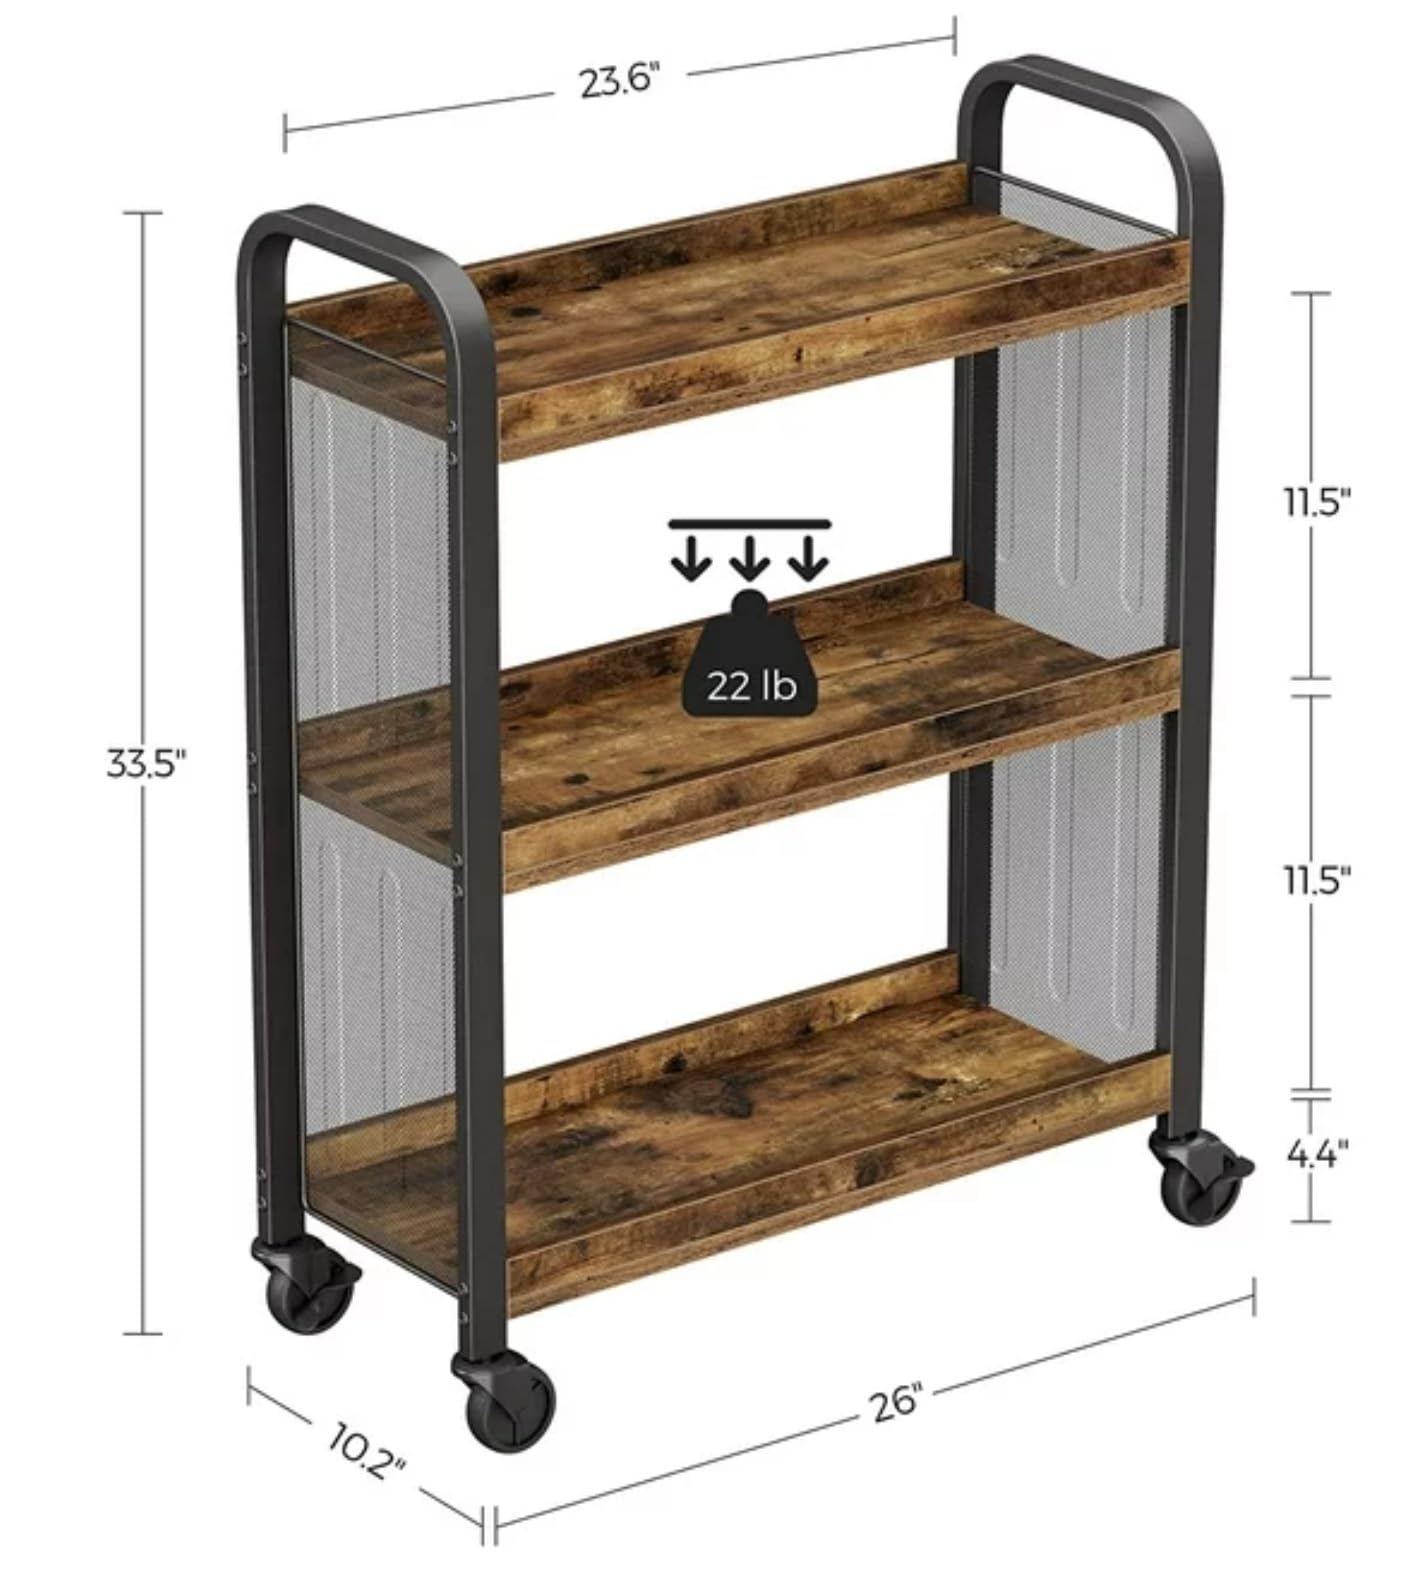 HYGRAD BUILT TO SURVIVE Wooden/Metal Industrial Look Rustic Narrow Rolling Kitchen Serving Cart Shelf Organiser Trolley With Wheels